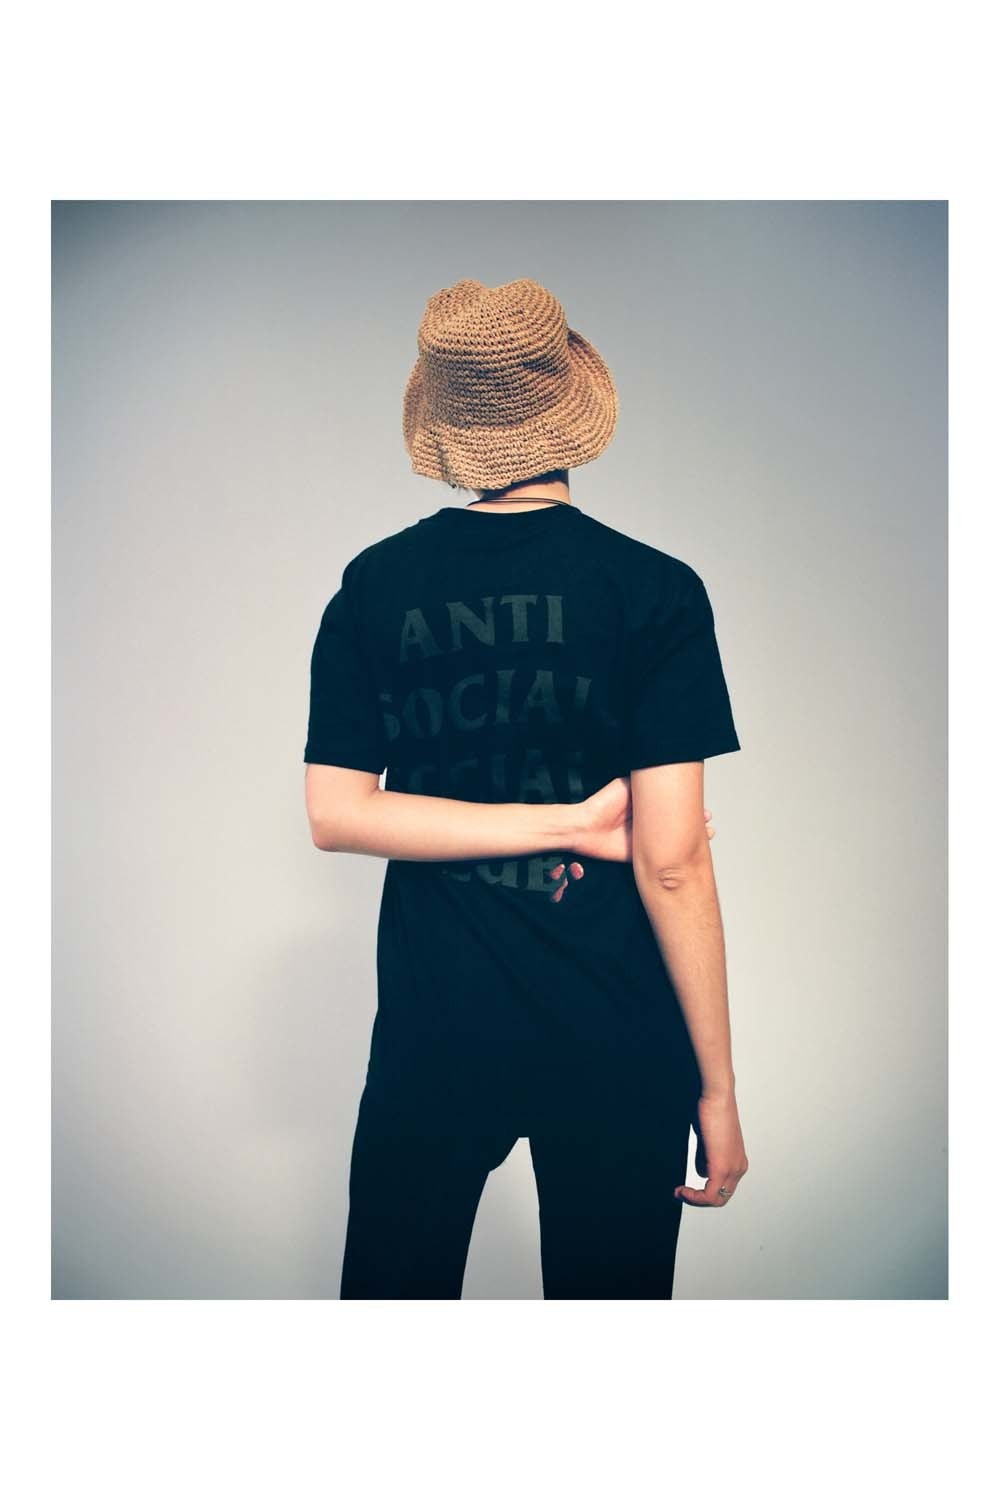 Anti Social Social Club Fall Winter 2019 Still Stressed Lookbook T Shirt Black